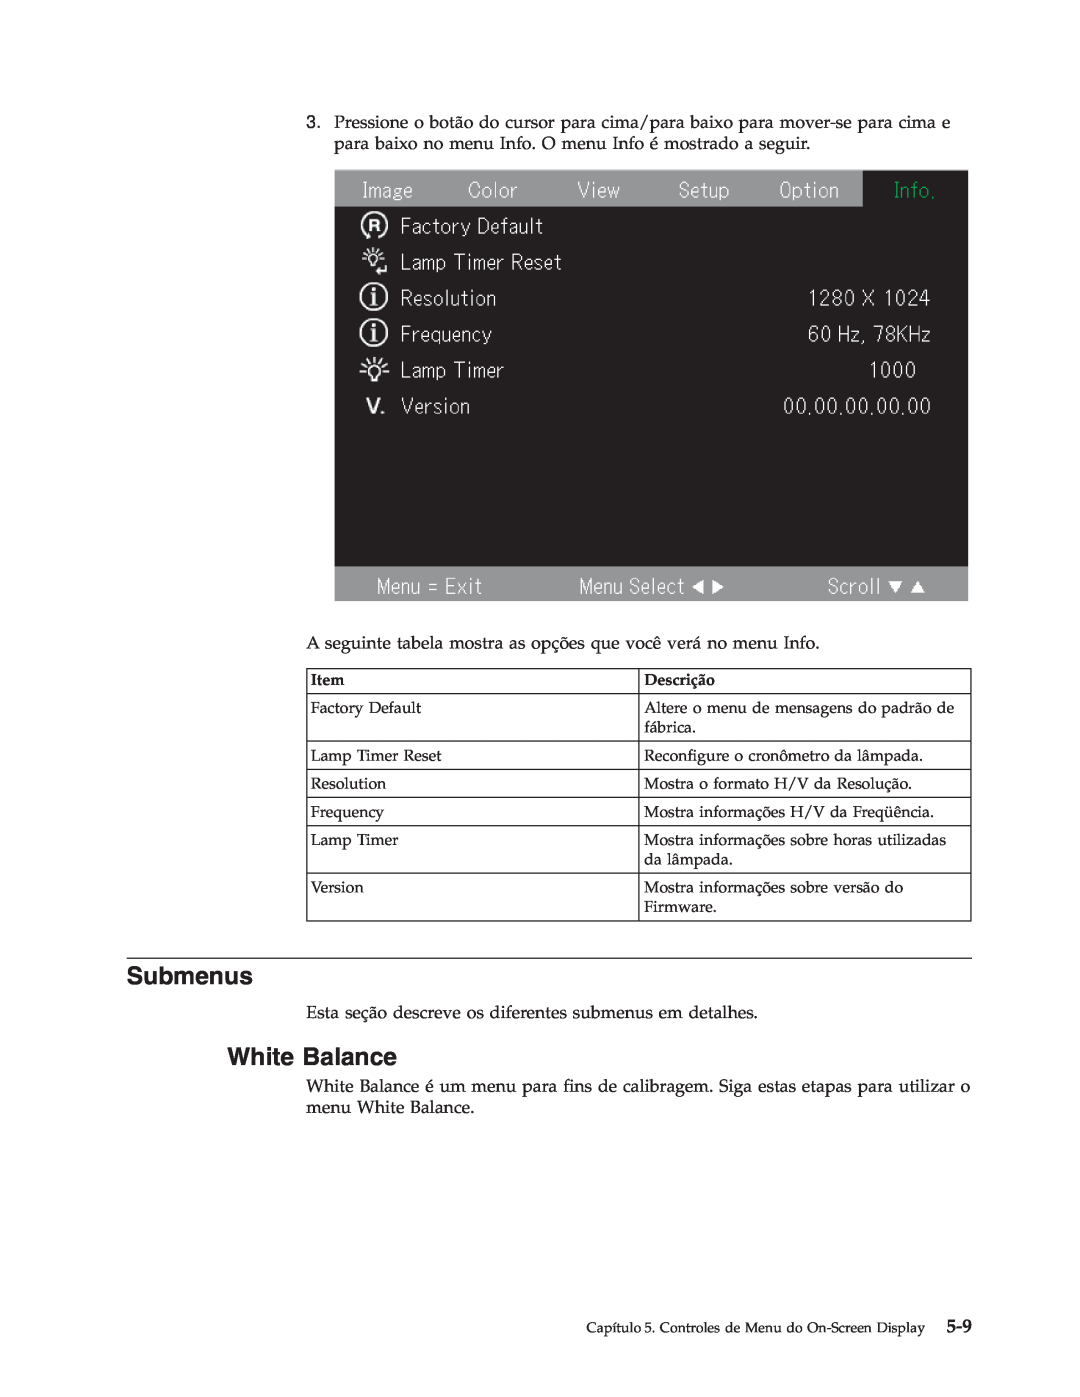 IBM M400 manual Submenus, White Balance 